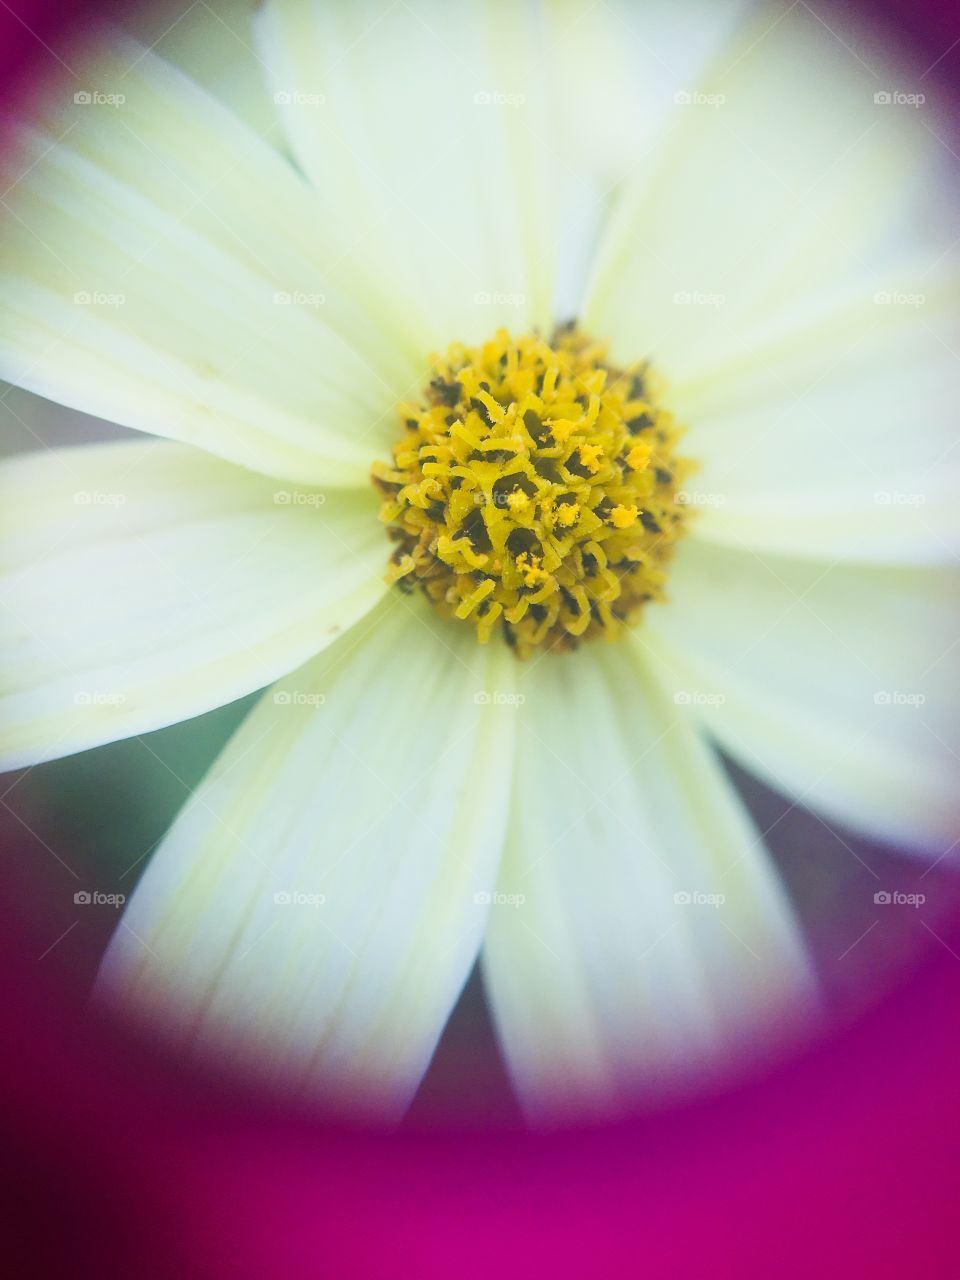 Tiny white flower using a macro lens